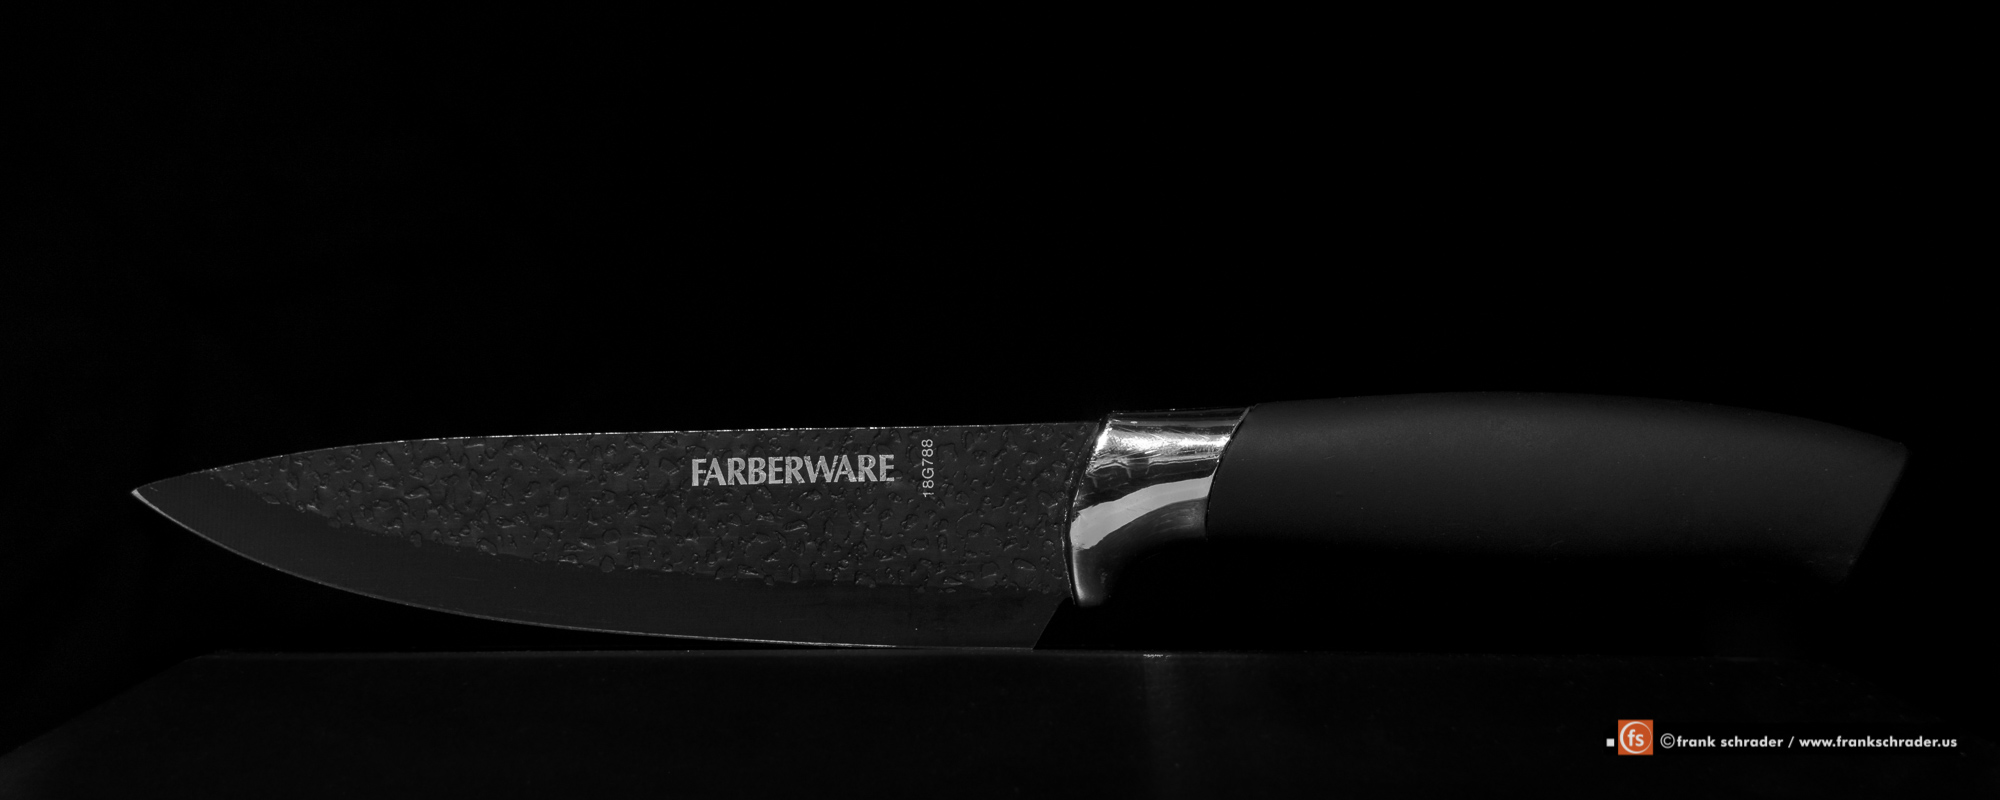 Product Photography: knife on black background